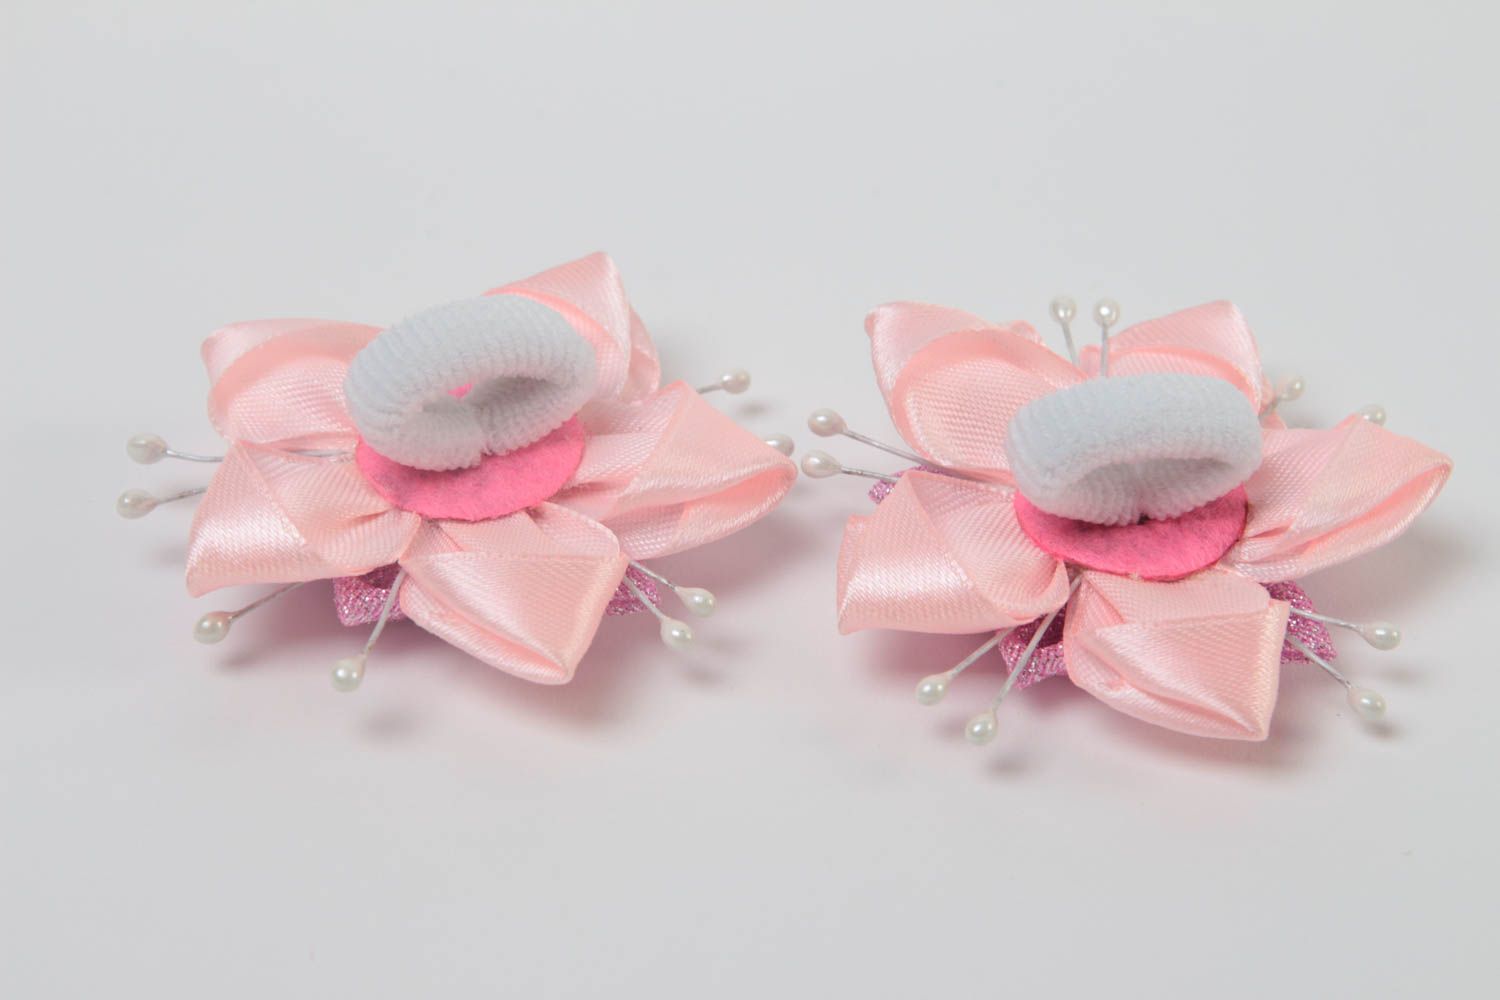 Handmade hair accessories hair ties flower hair accessories gifts for girls photo 4